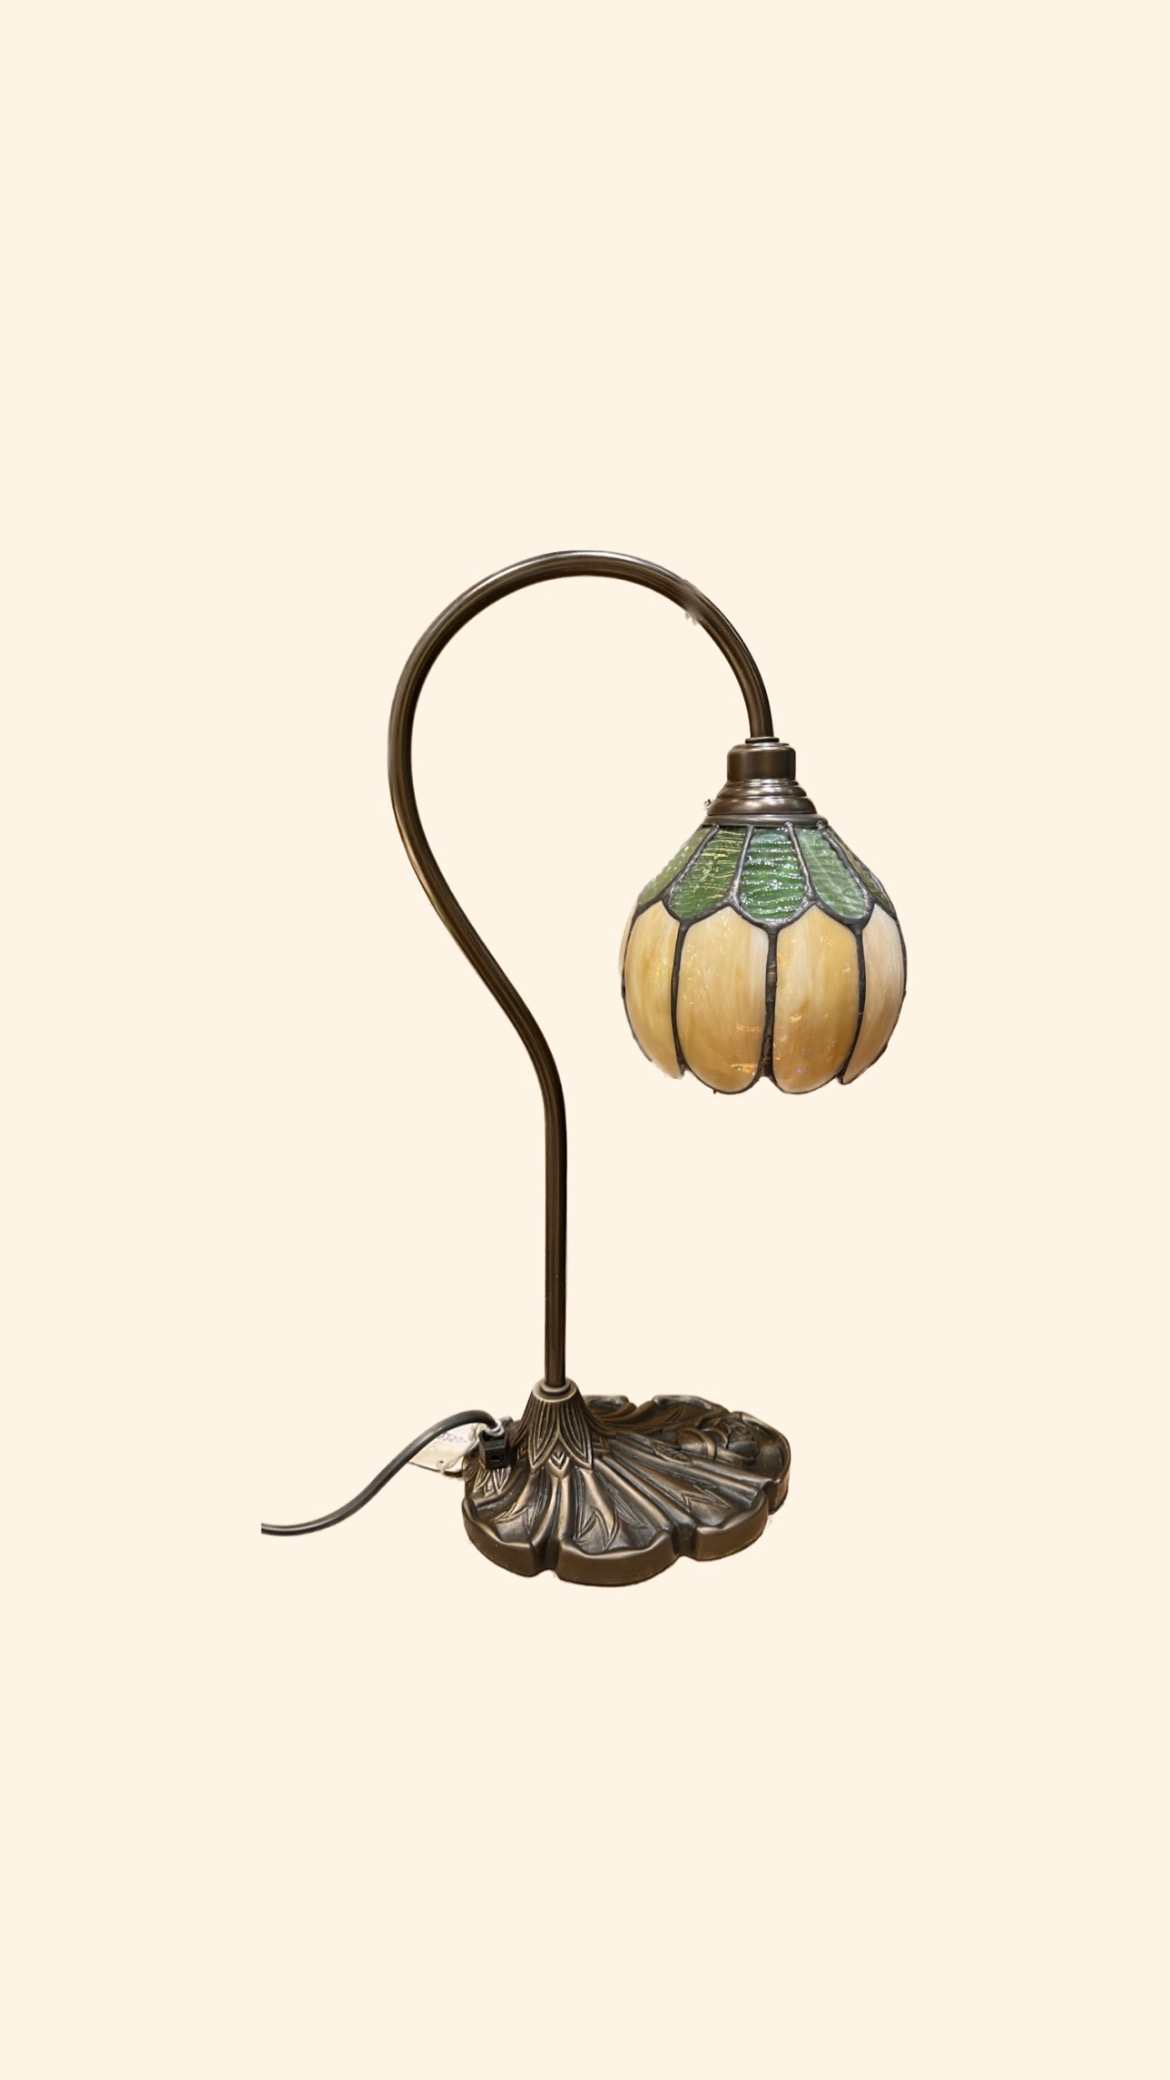 Tiffany Bordslampa Gulsippa med böjd arm 13 cm